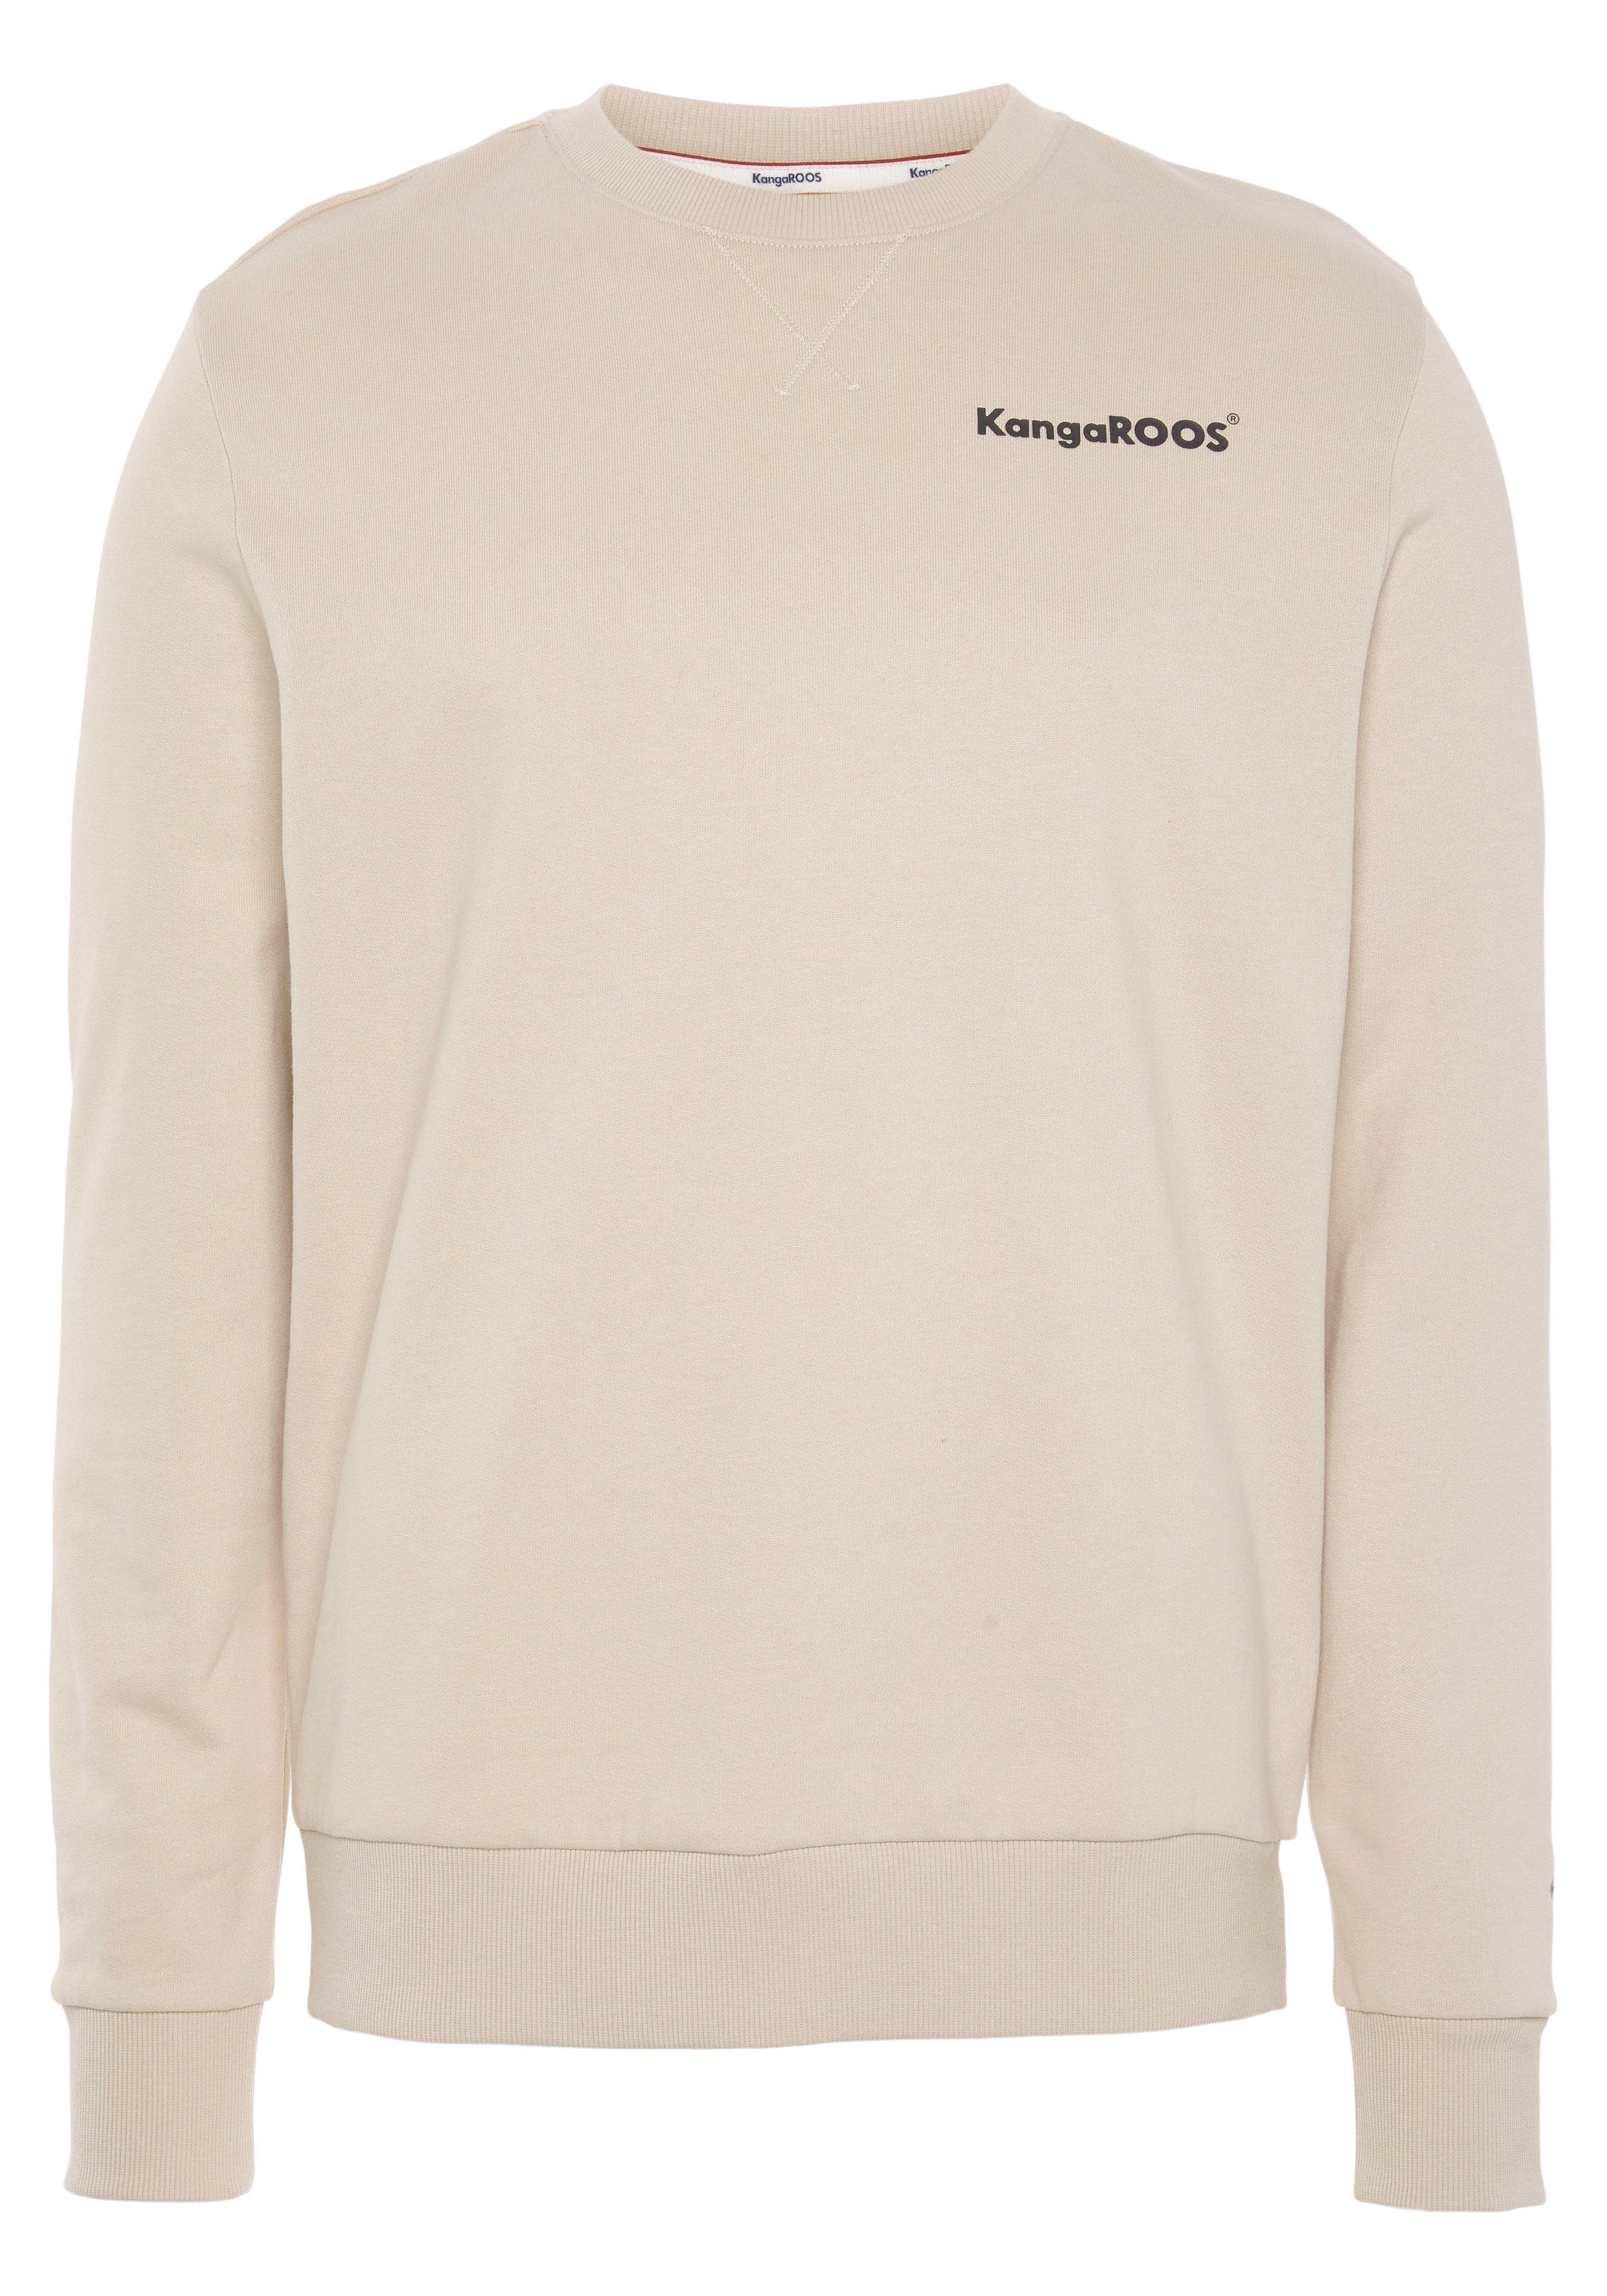 KangaROOS Sweatshirt mit Logoschriftzug beige